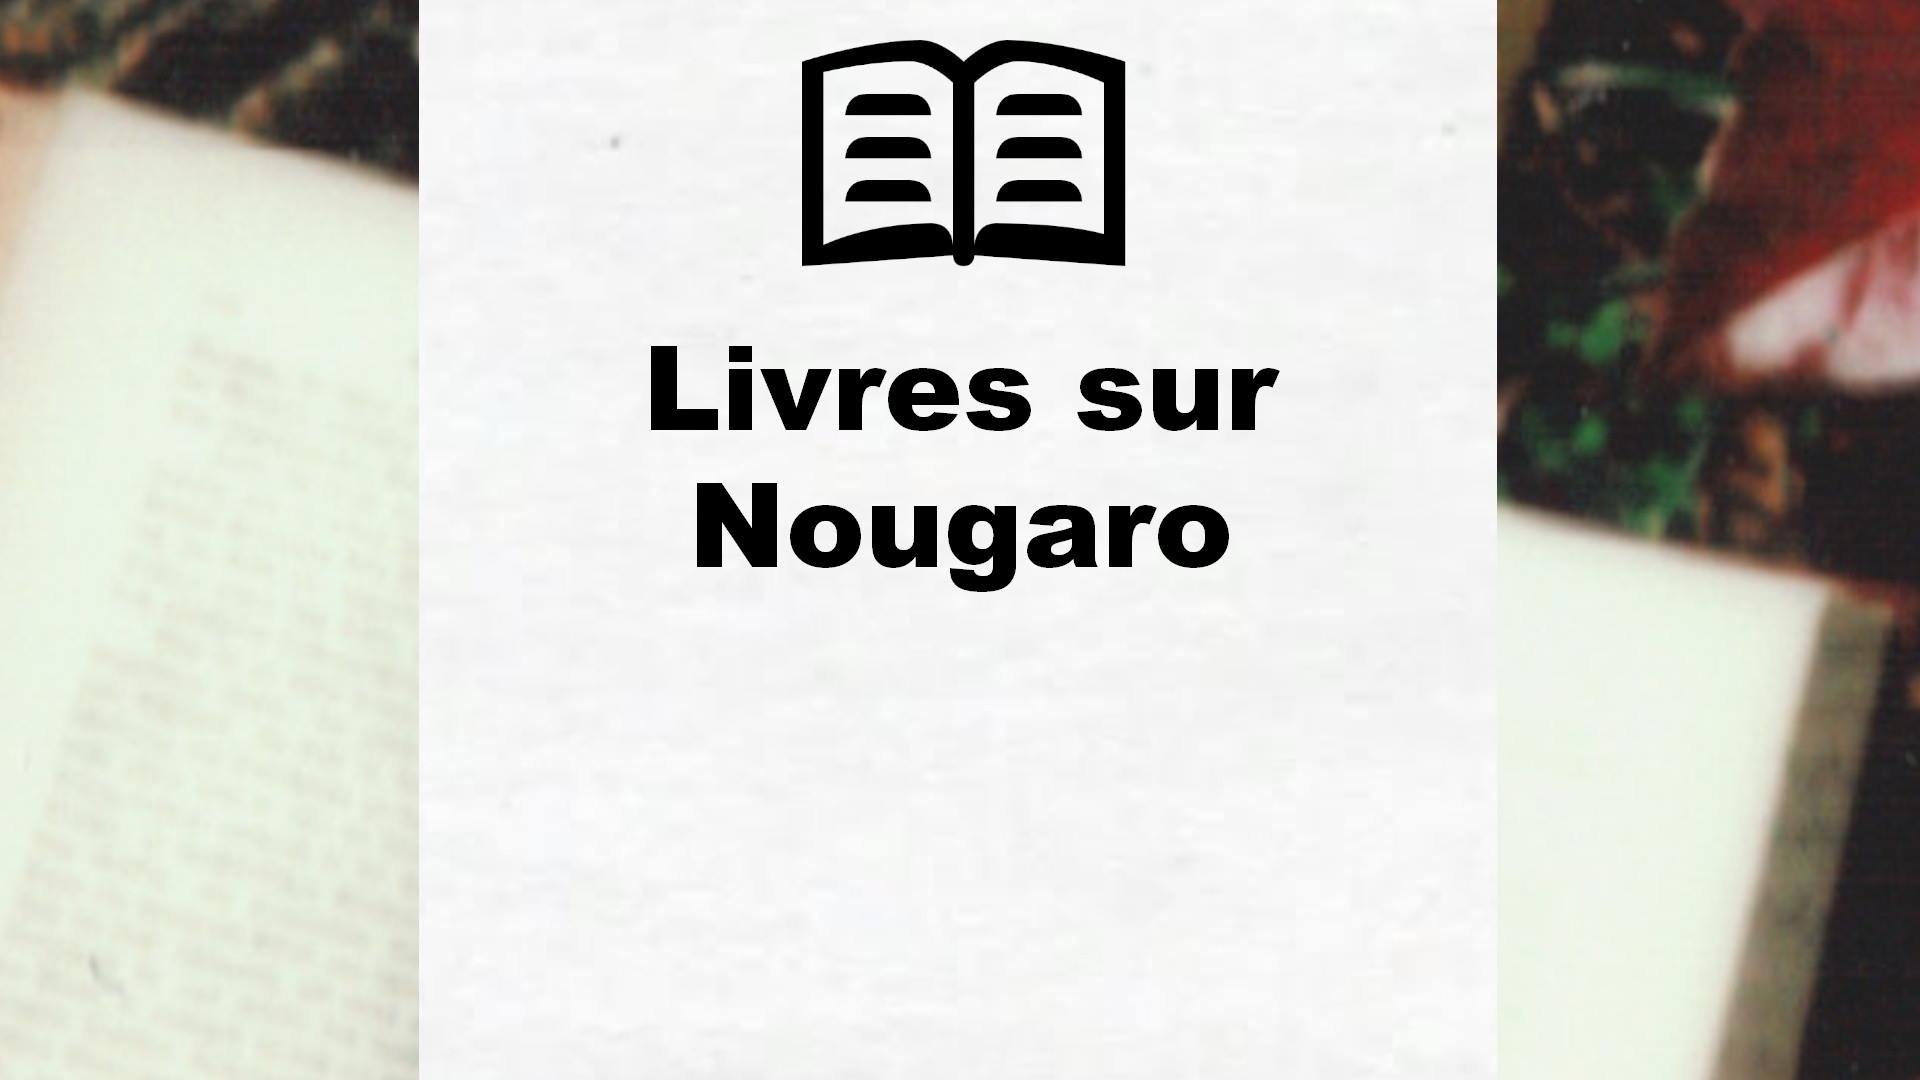 Livres sur Nougaro